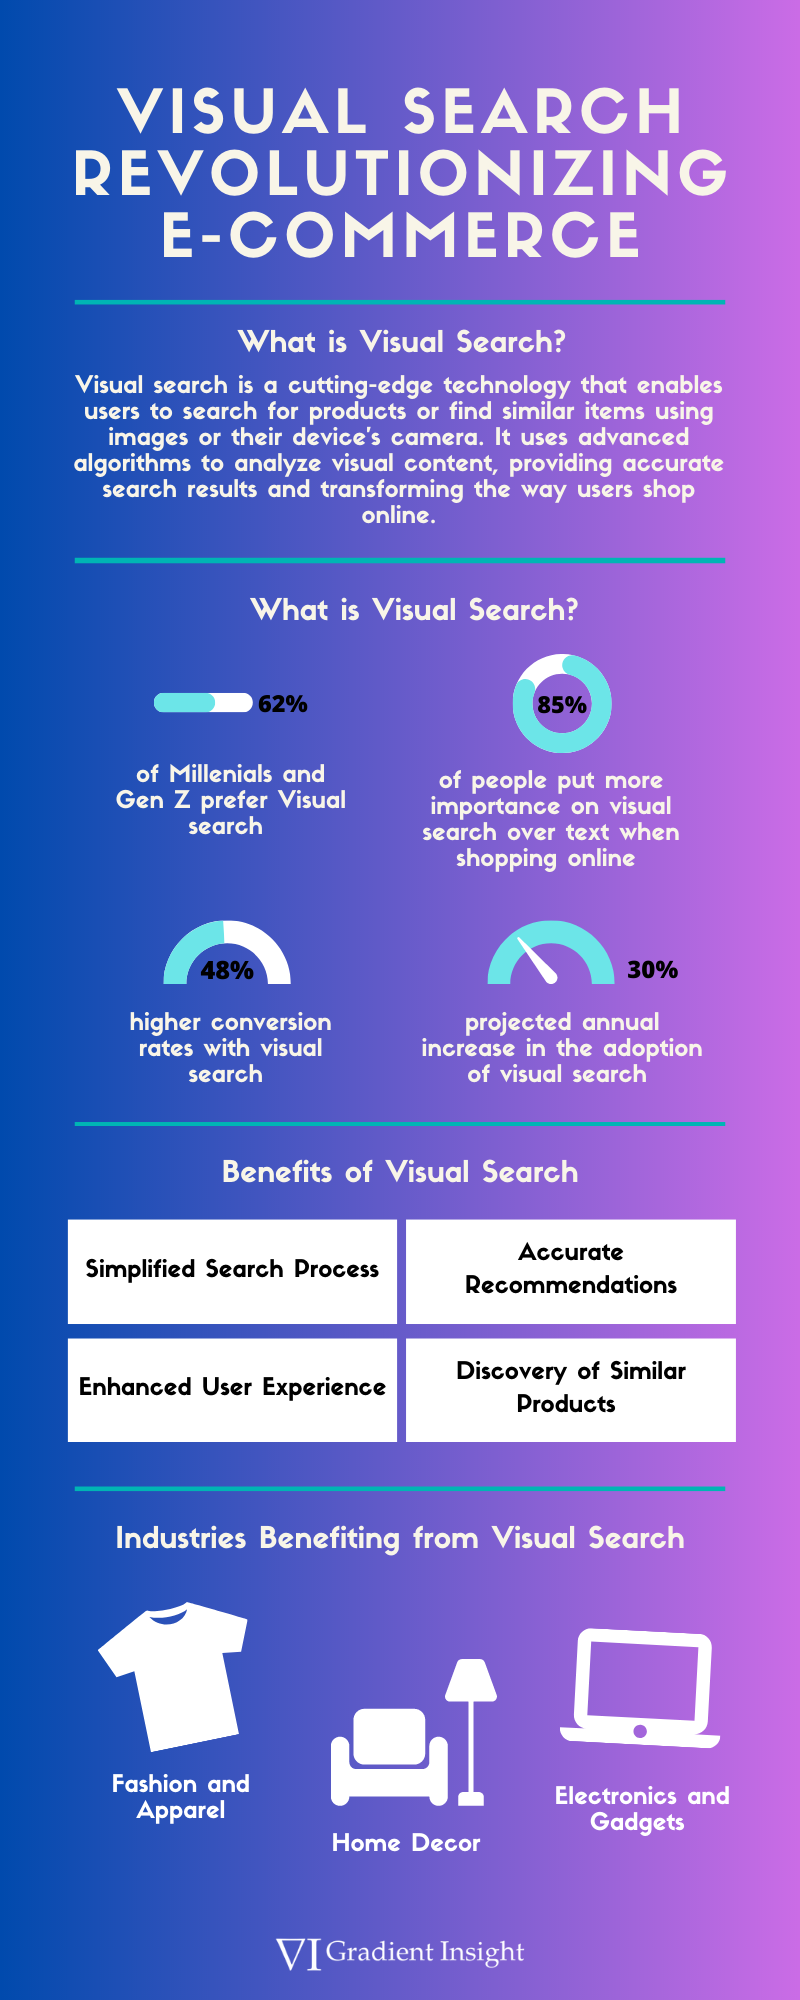 Visual Search and E-commerce